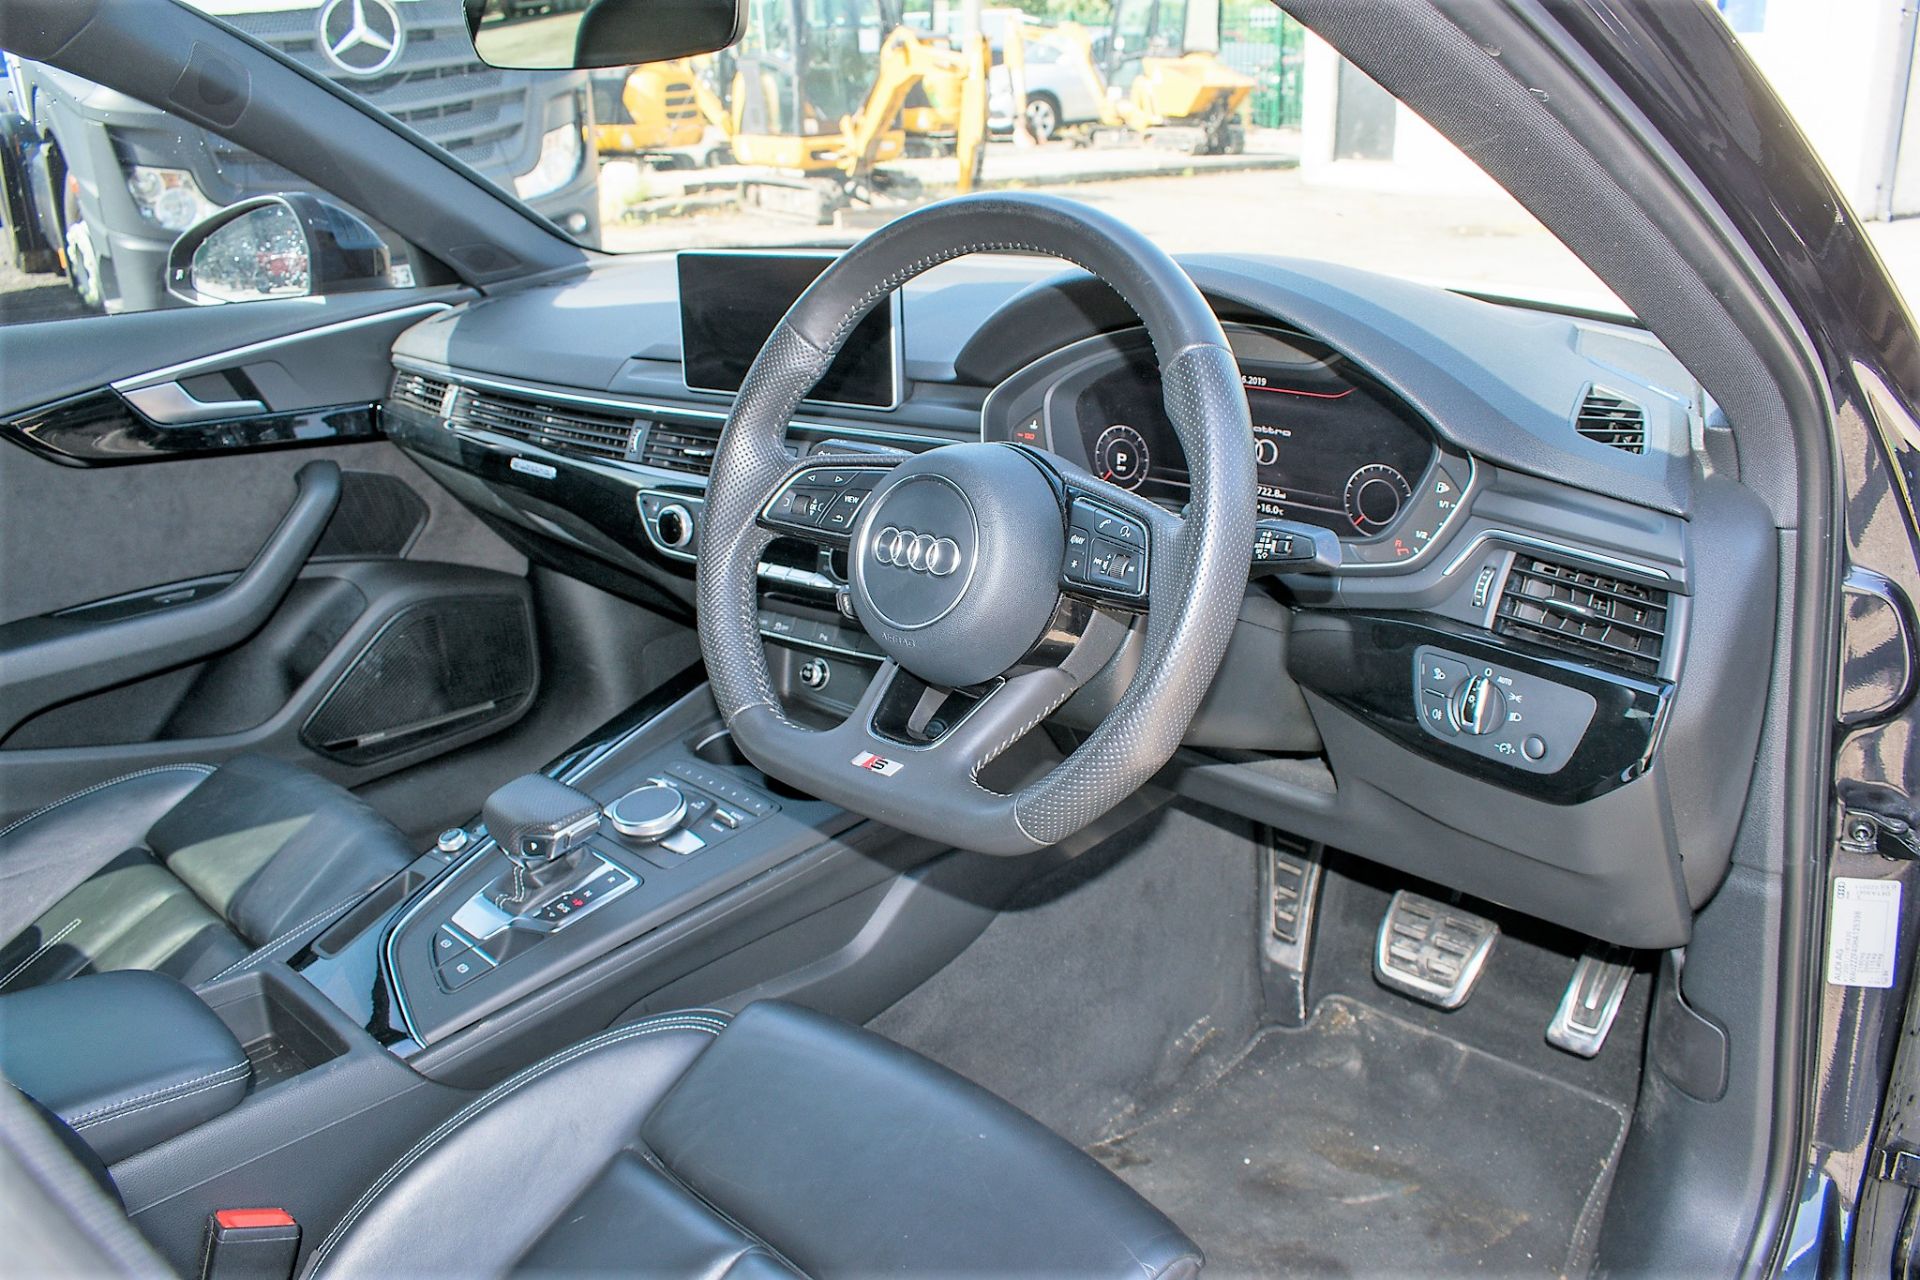 Audi A4 S-Line TDI Quattro 4 door saloon car Registration Number: LT67 XXF Date of Registration: - Image 15 of 20